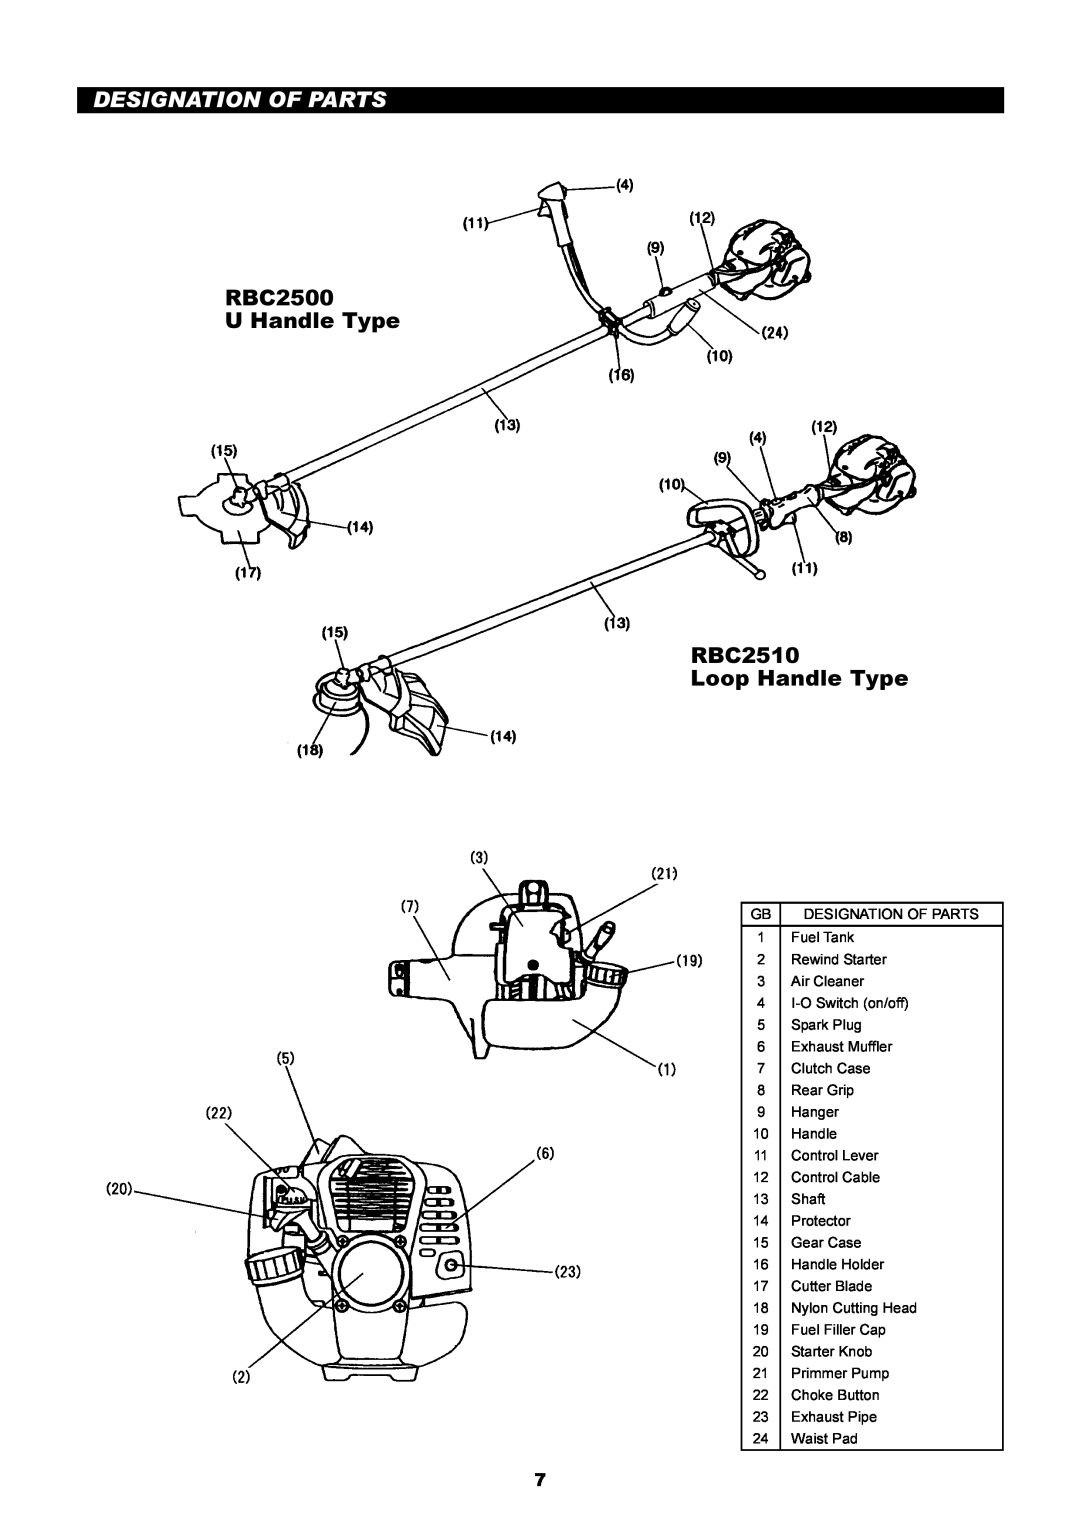 Makita instruction manual Designation Of Parts, RBC2500 U Handle Type RBC2510 Loop Handle Type 